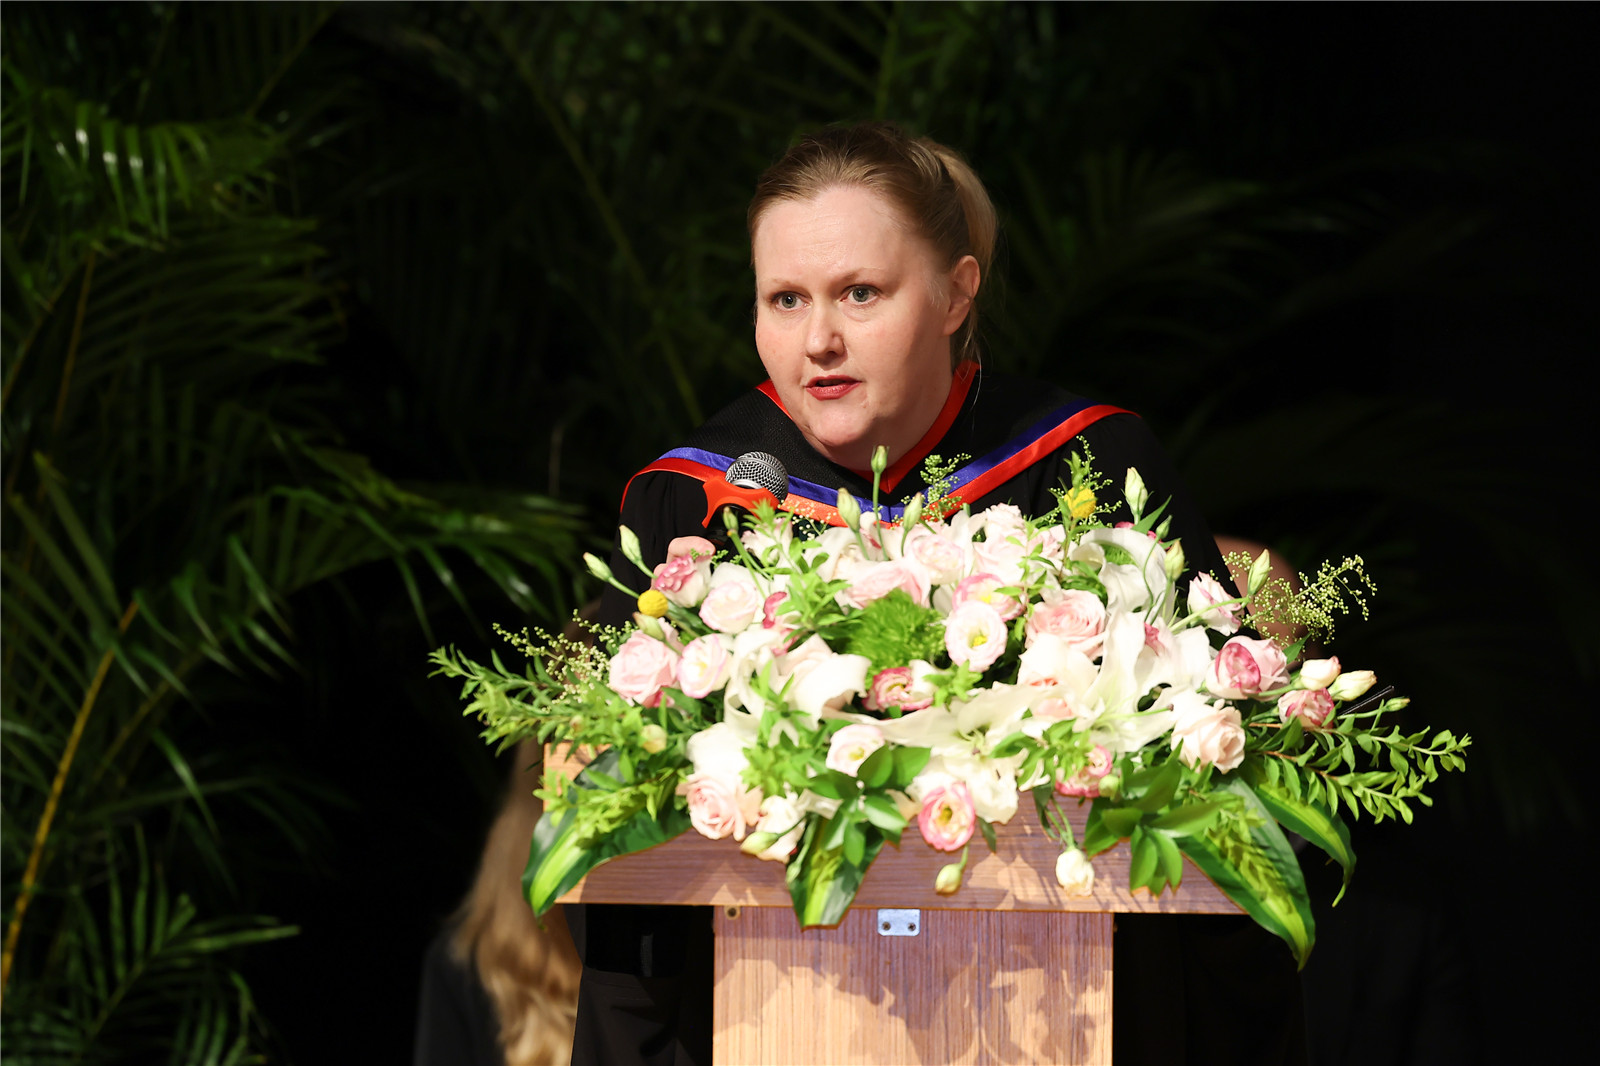 Rachel Edwards addresses on the graduation ceremony